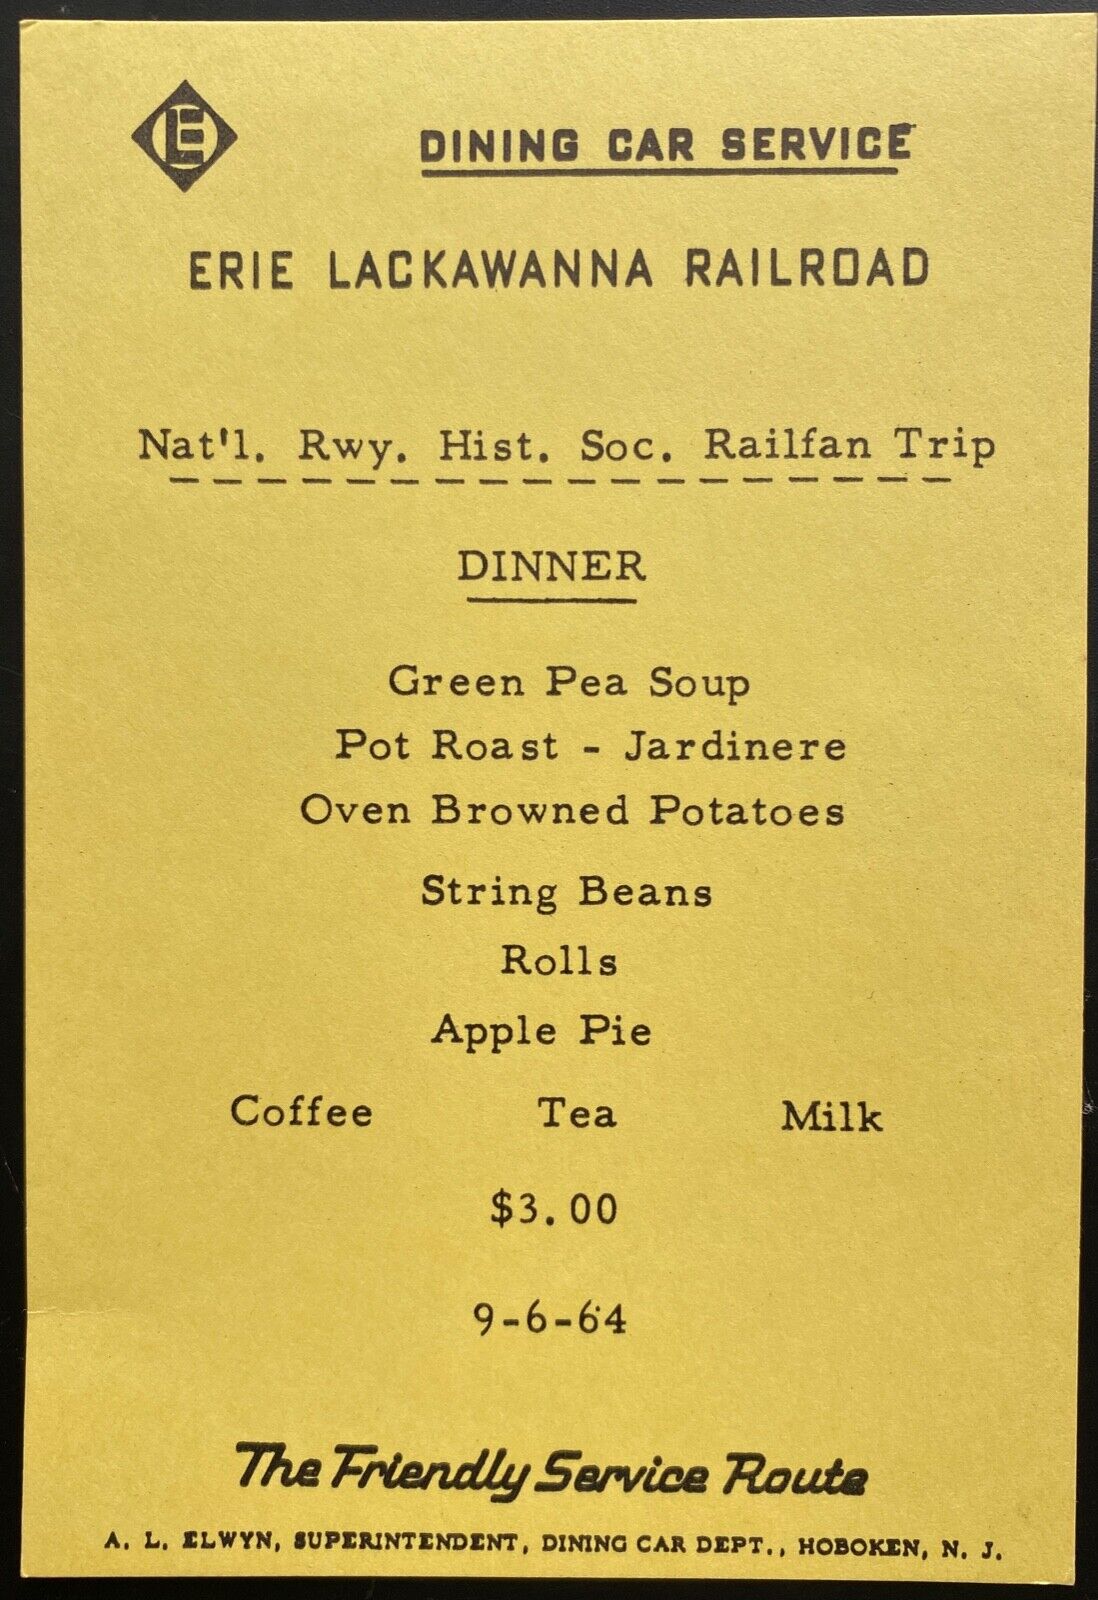 1964 ERIE LACKAWANNA RAILROAD vintage dinner menu DINING CAR SERVICE Hoboken, NJ